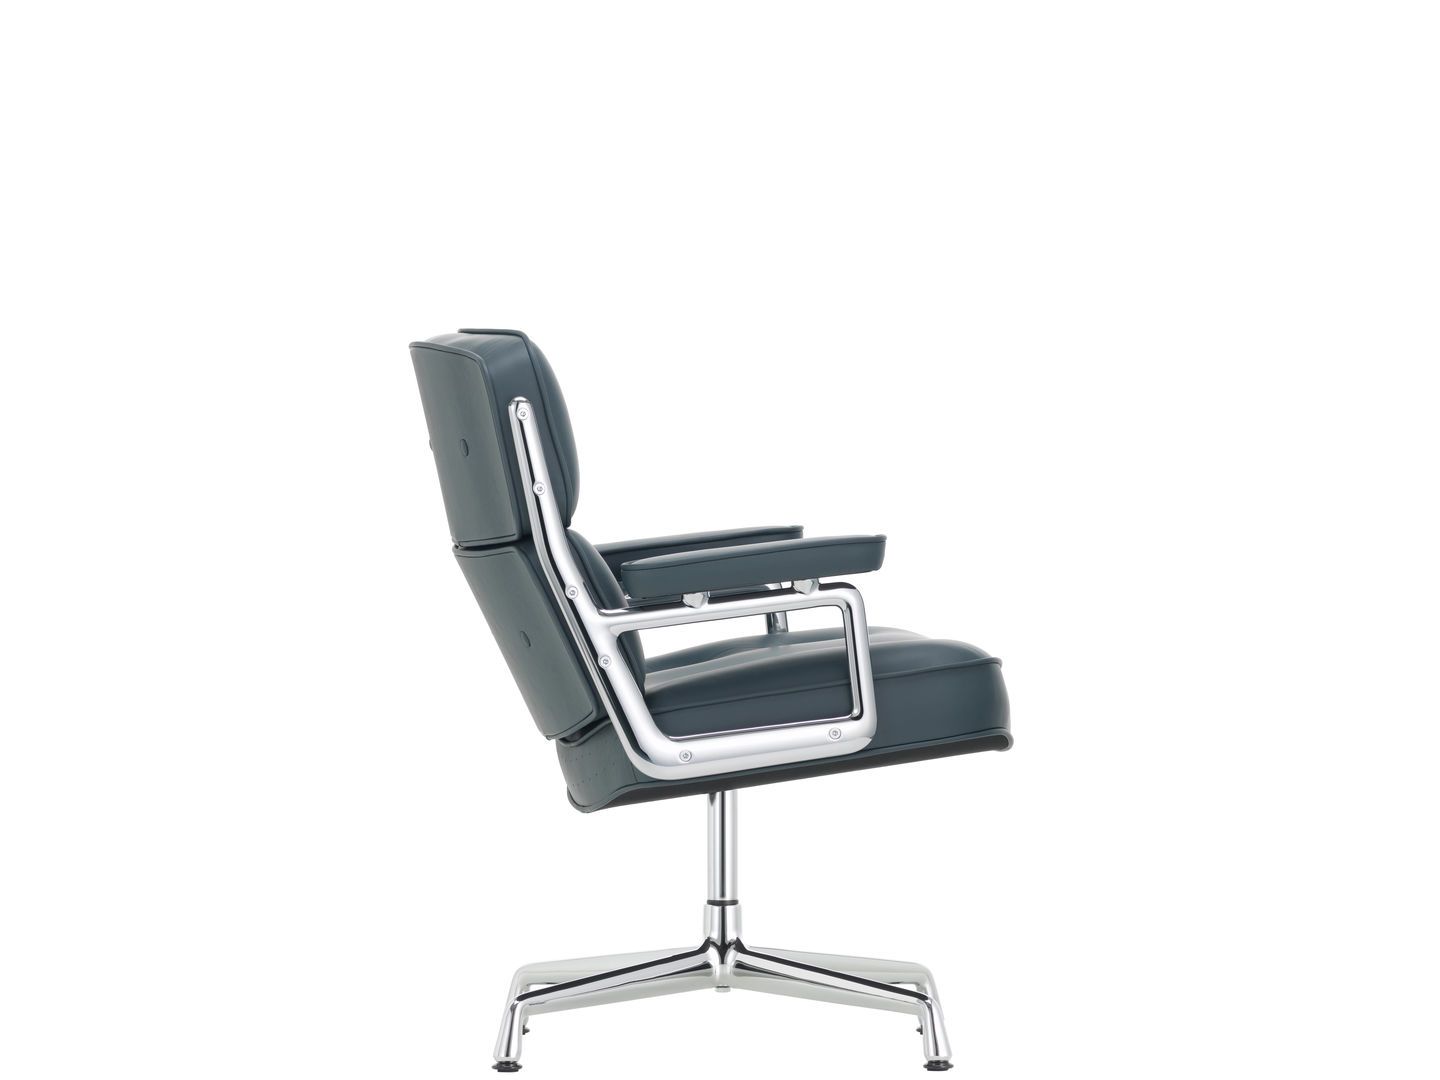 Lobby Chair ES 108 | One52 Furniture 